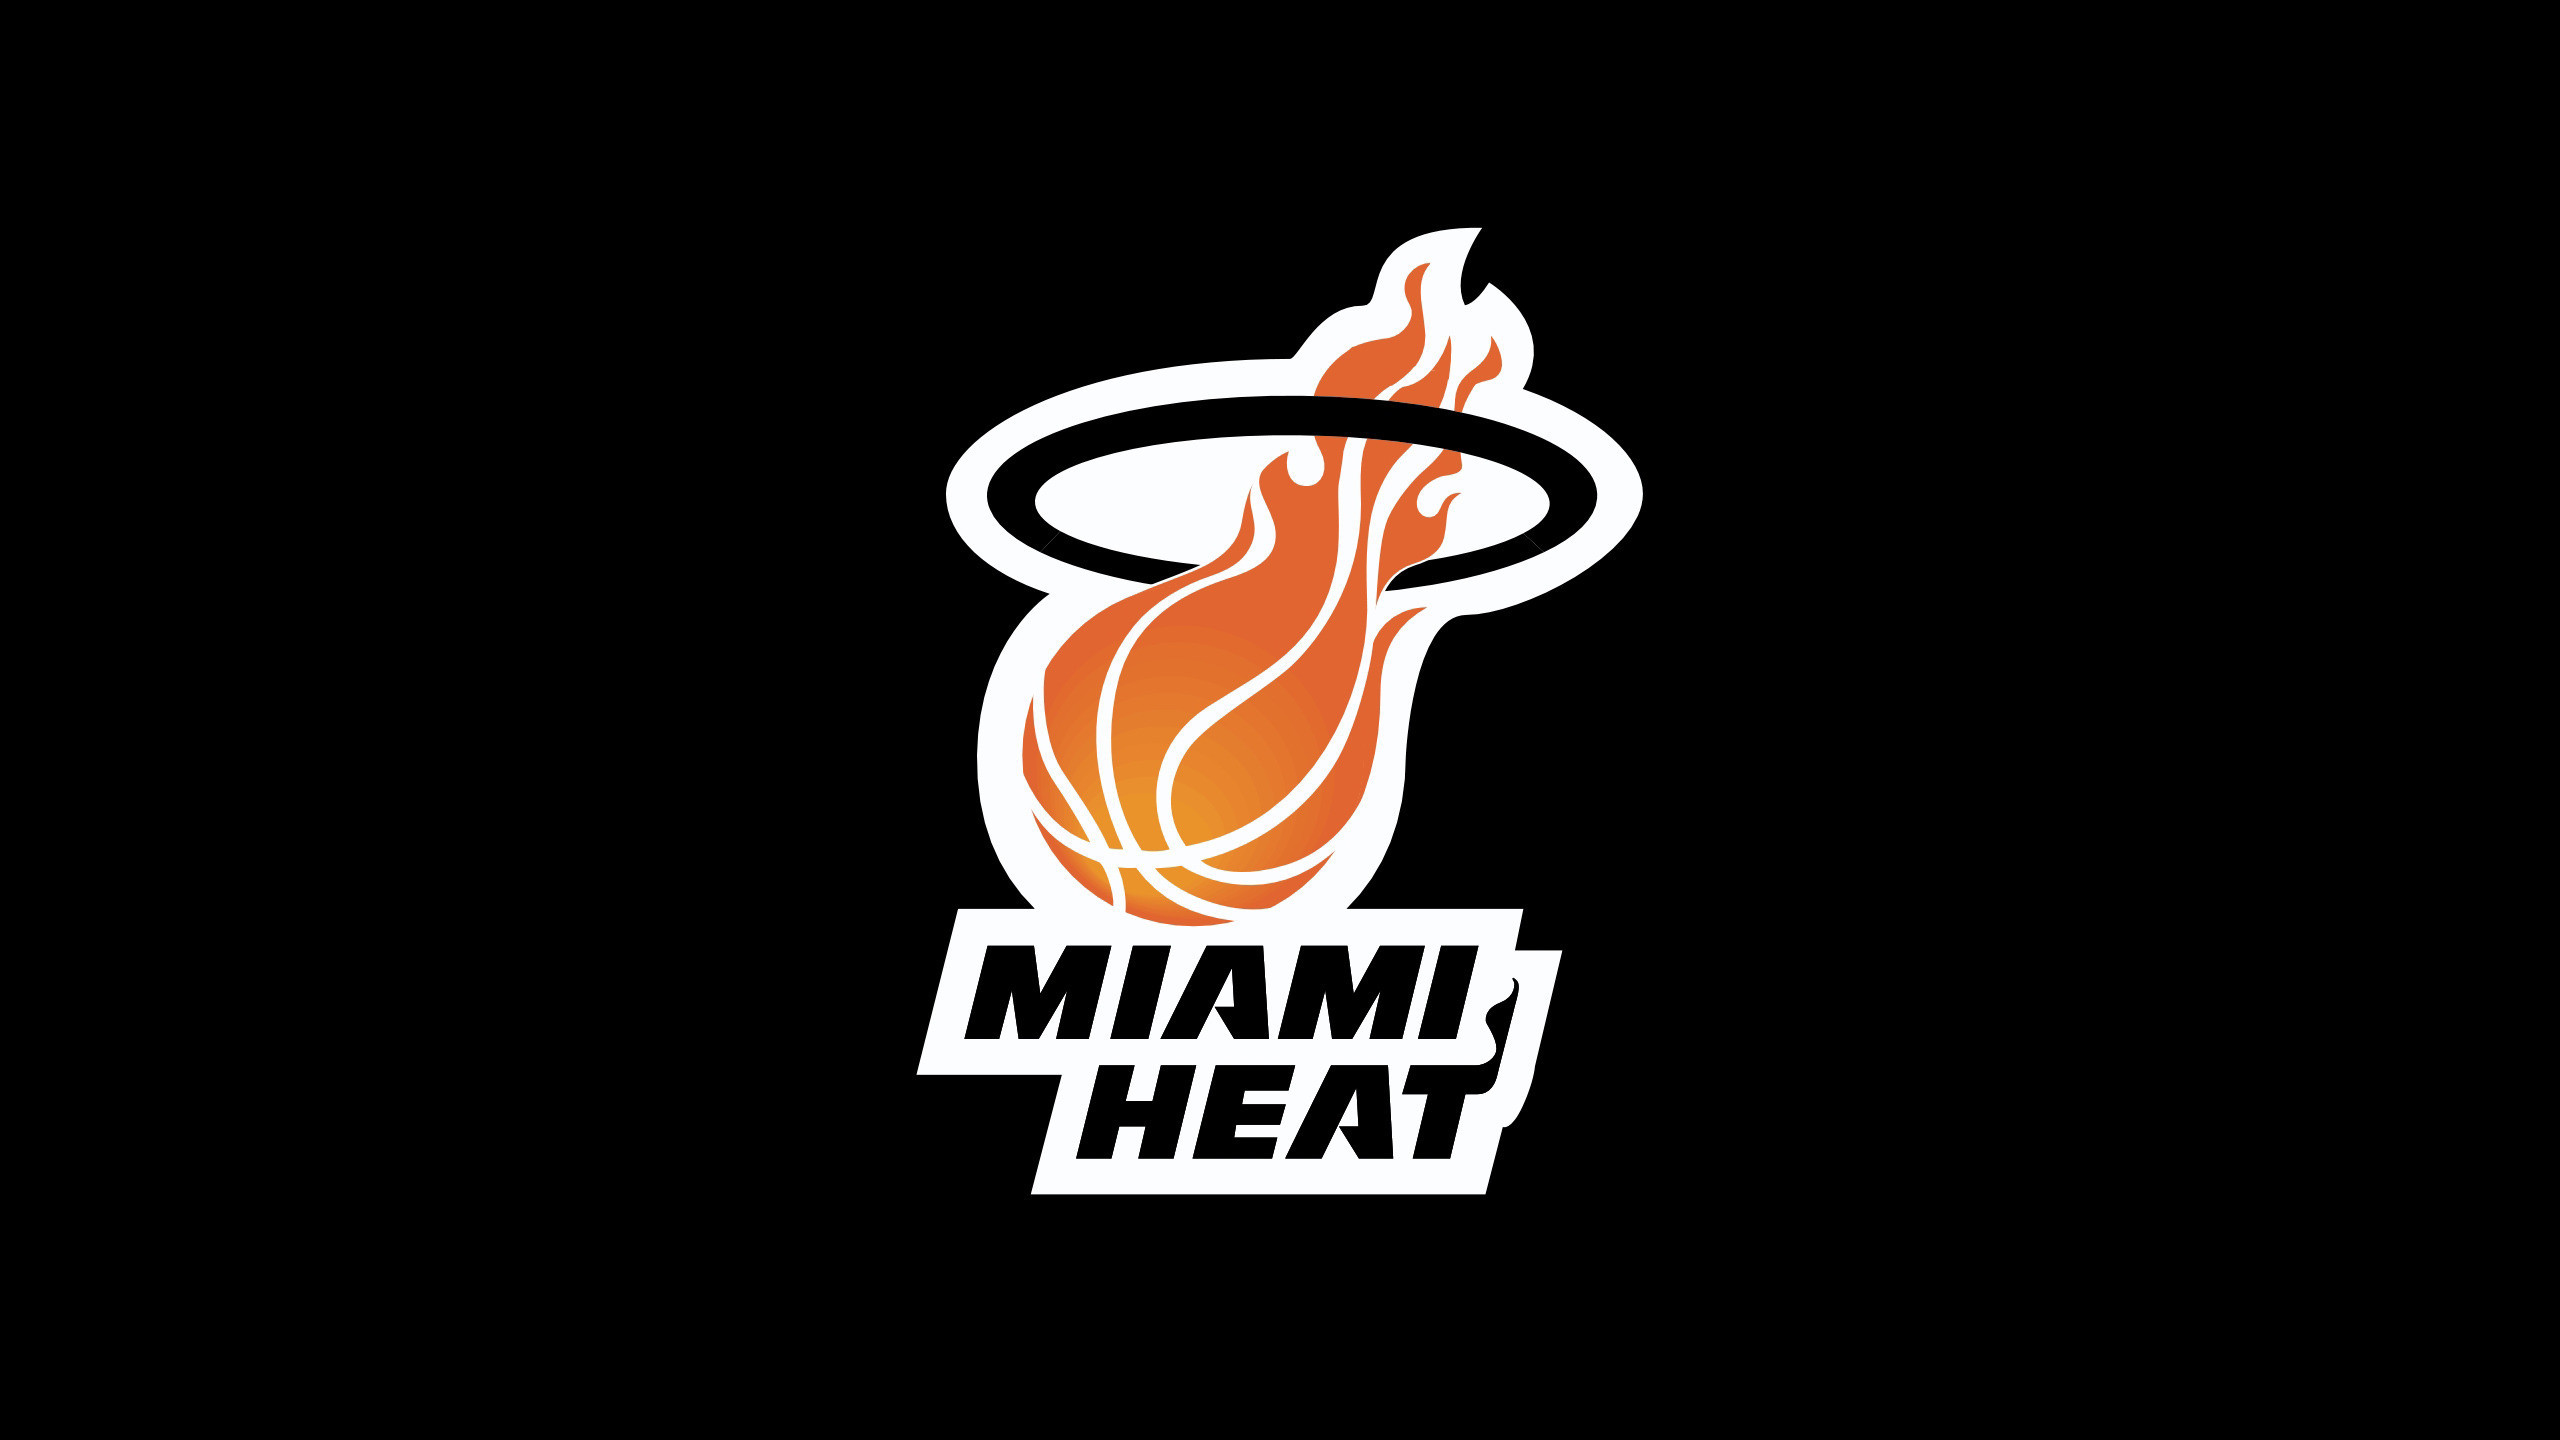 Miami Heat Wallpaper 2018 HD (61+ images)